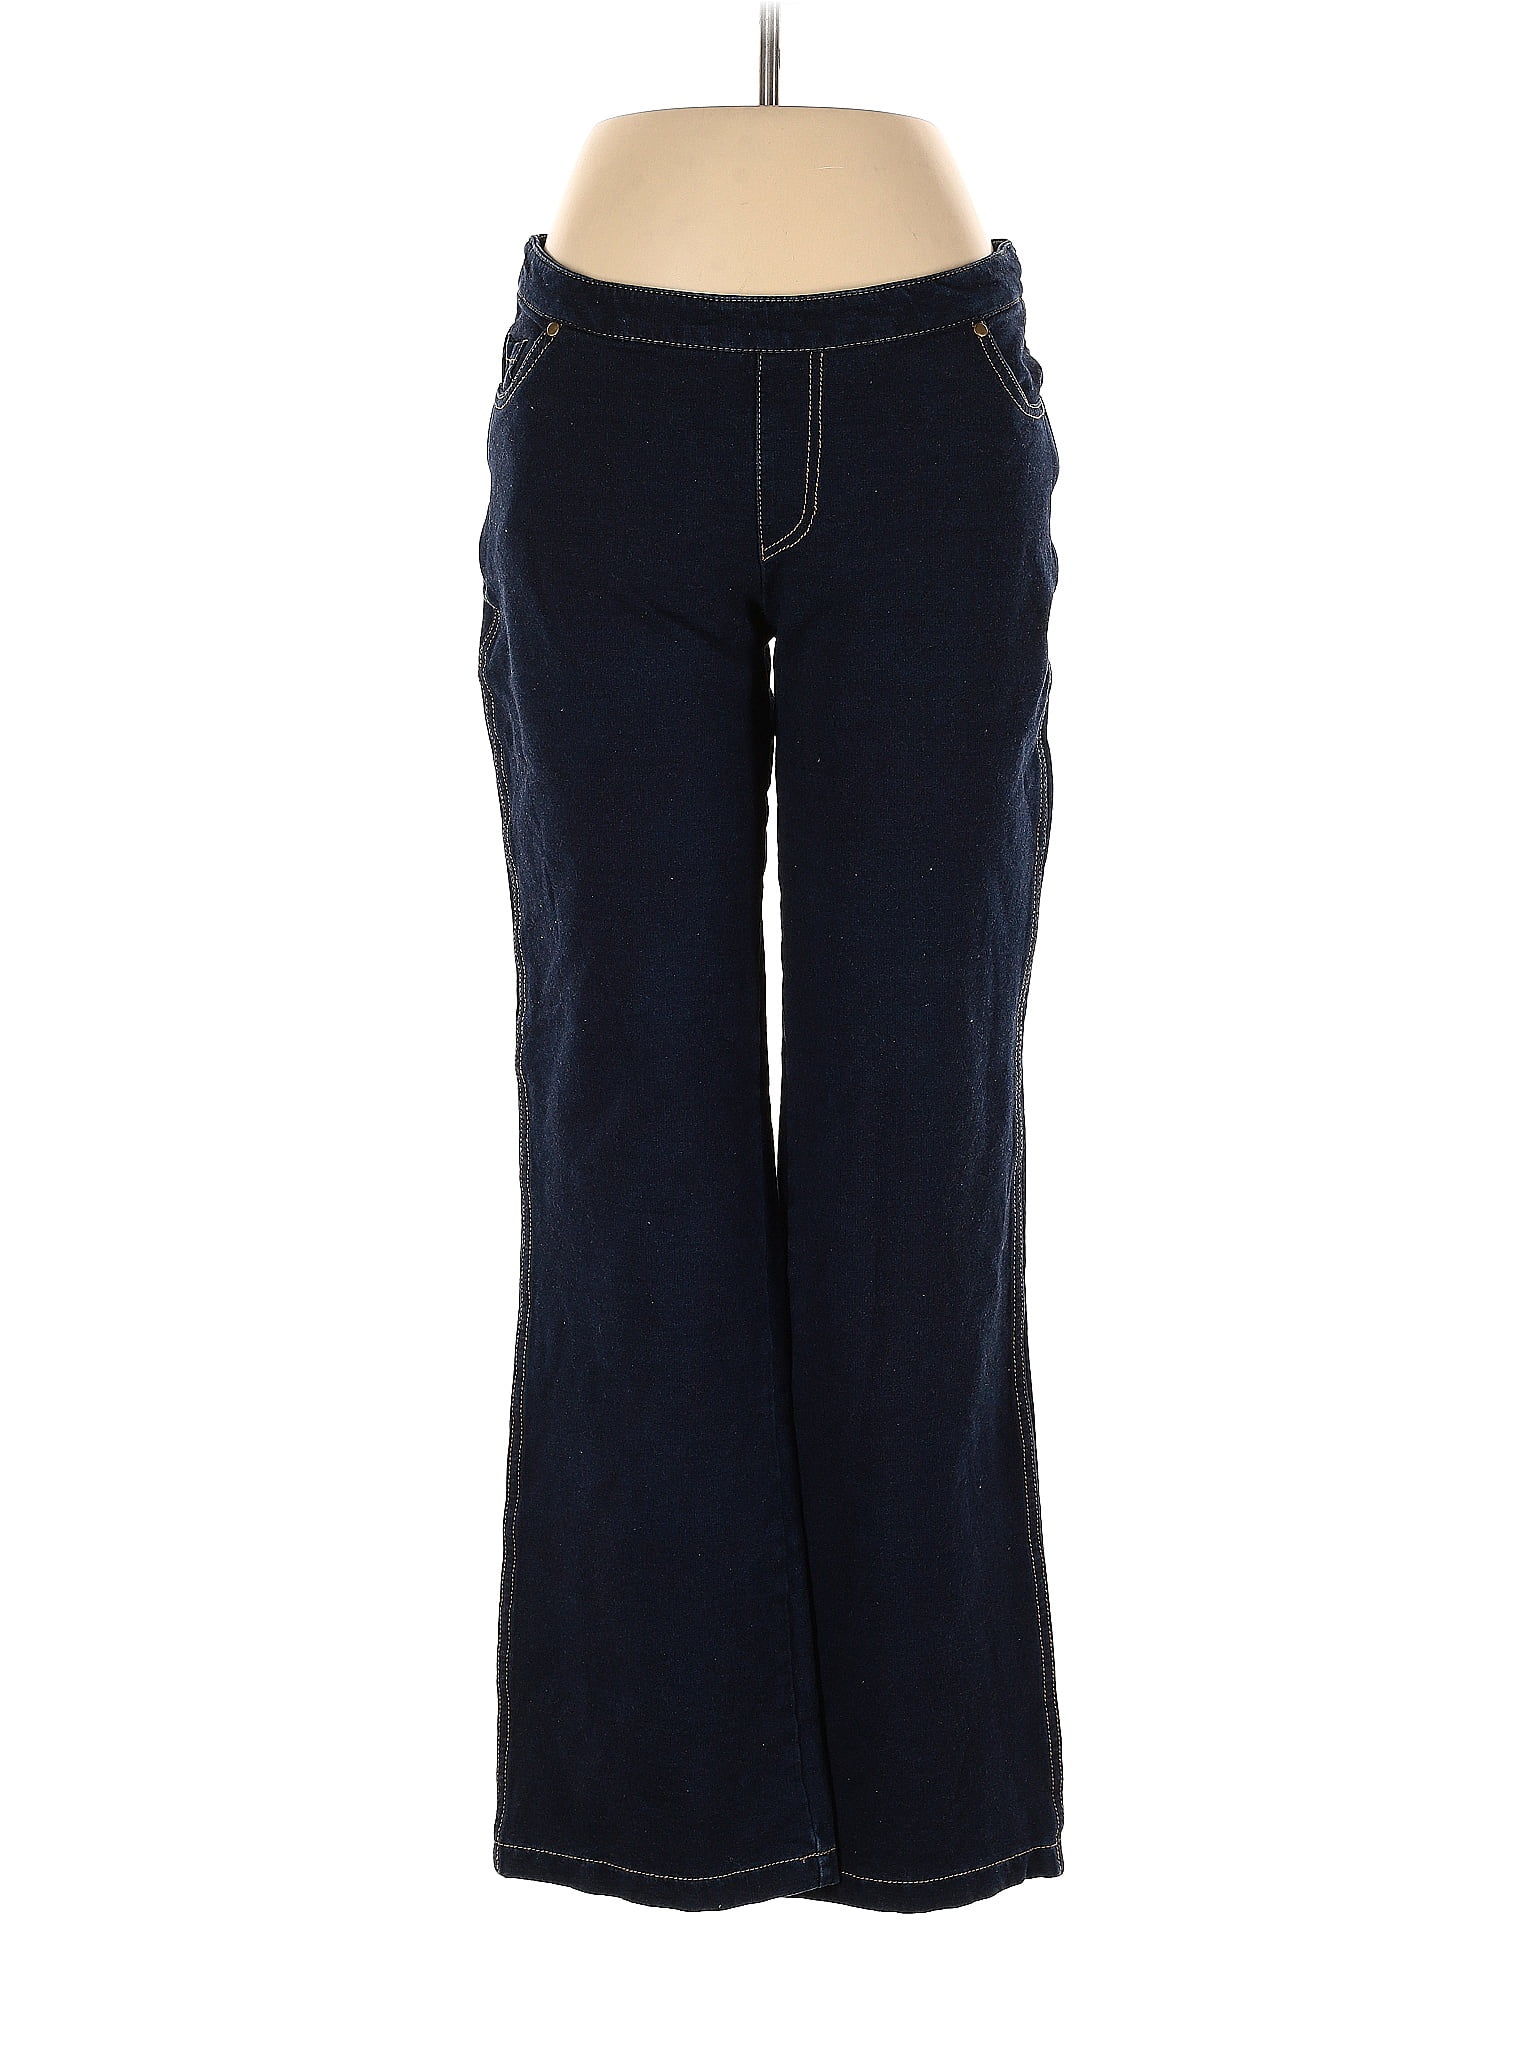 Sofia by Sofia Vergara Solid Blue Jeans Size 6 - 50% off